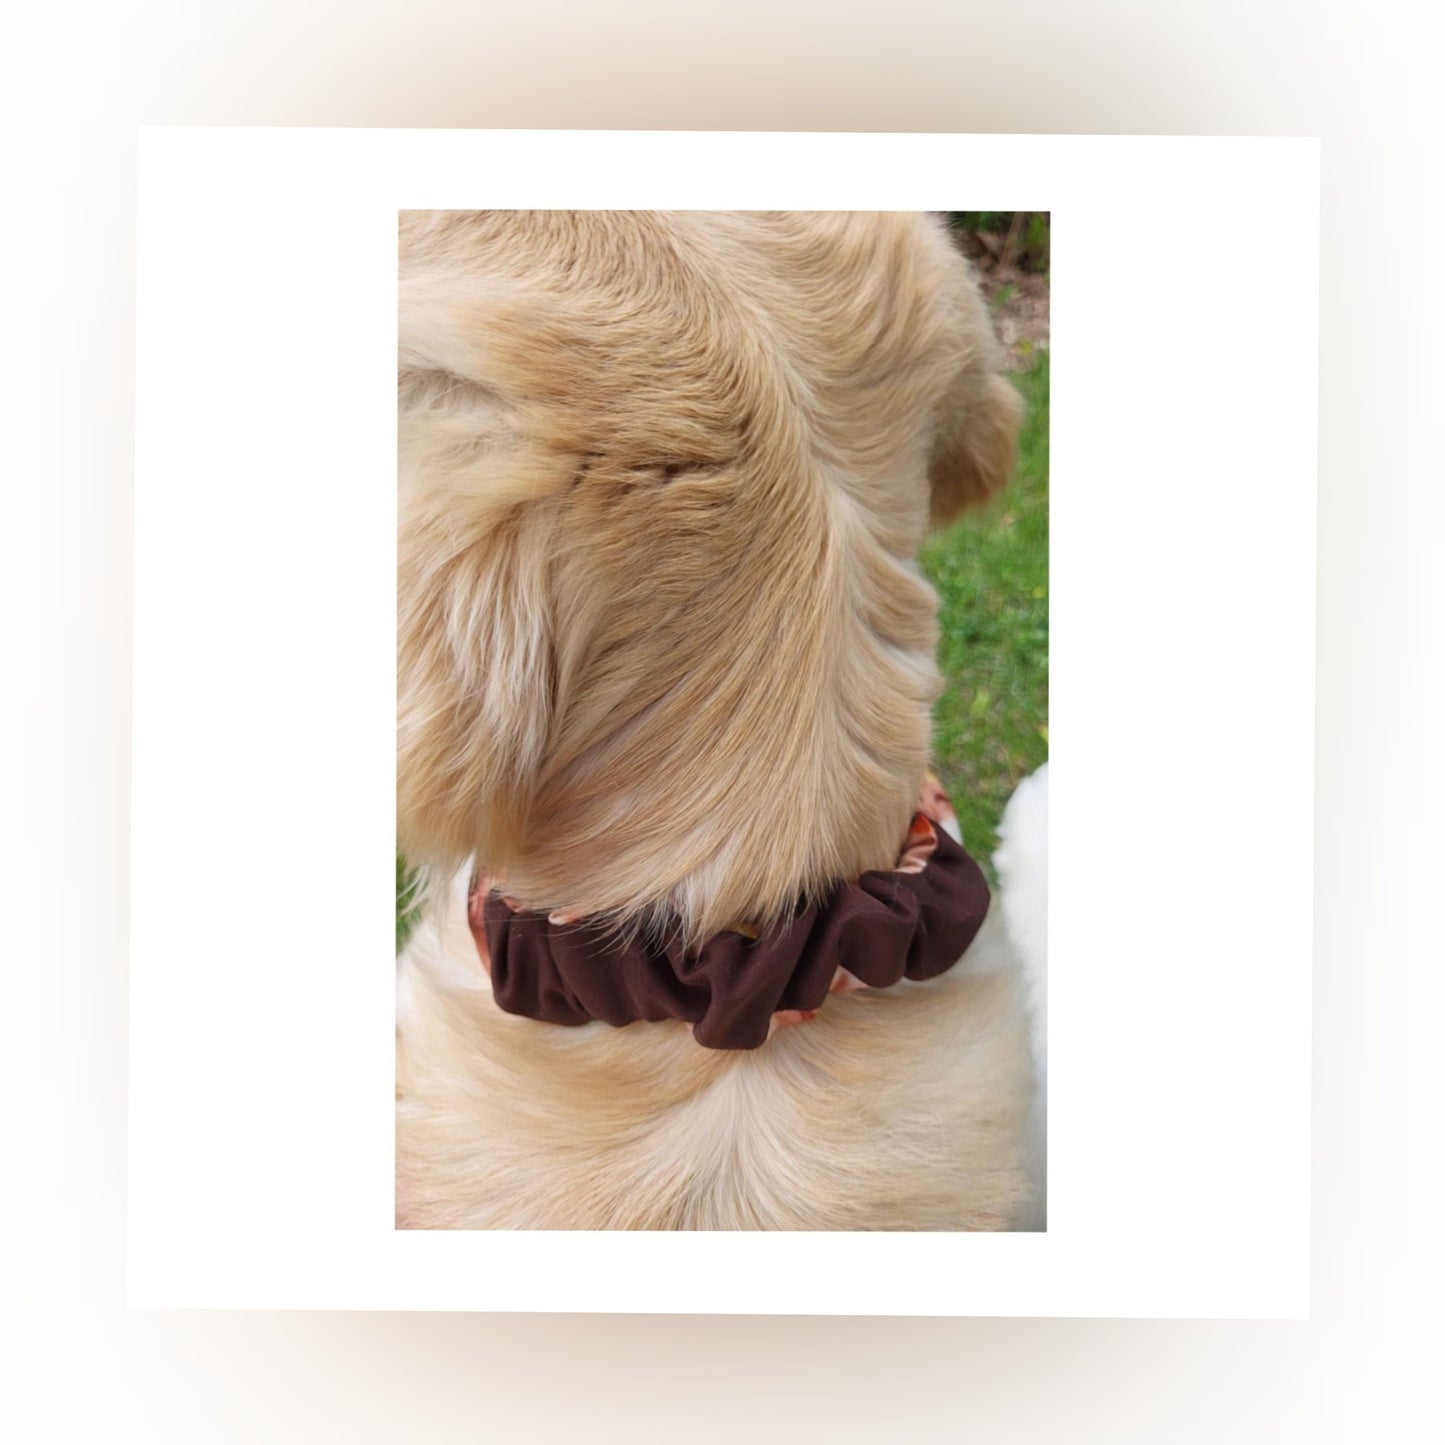 Dog Bandana Scrunchie - Brown Tie Dye/ Chocolate Brown